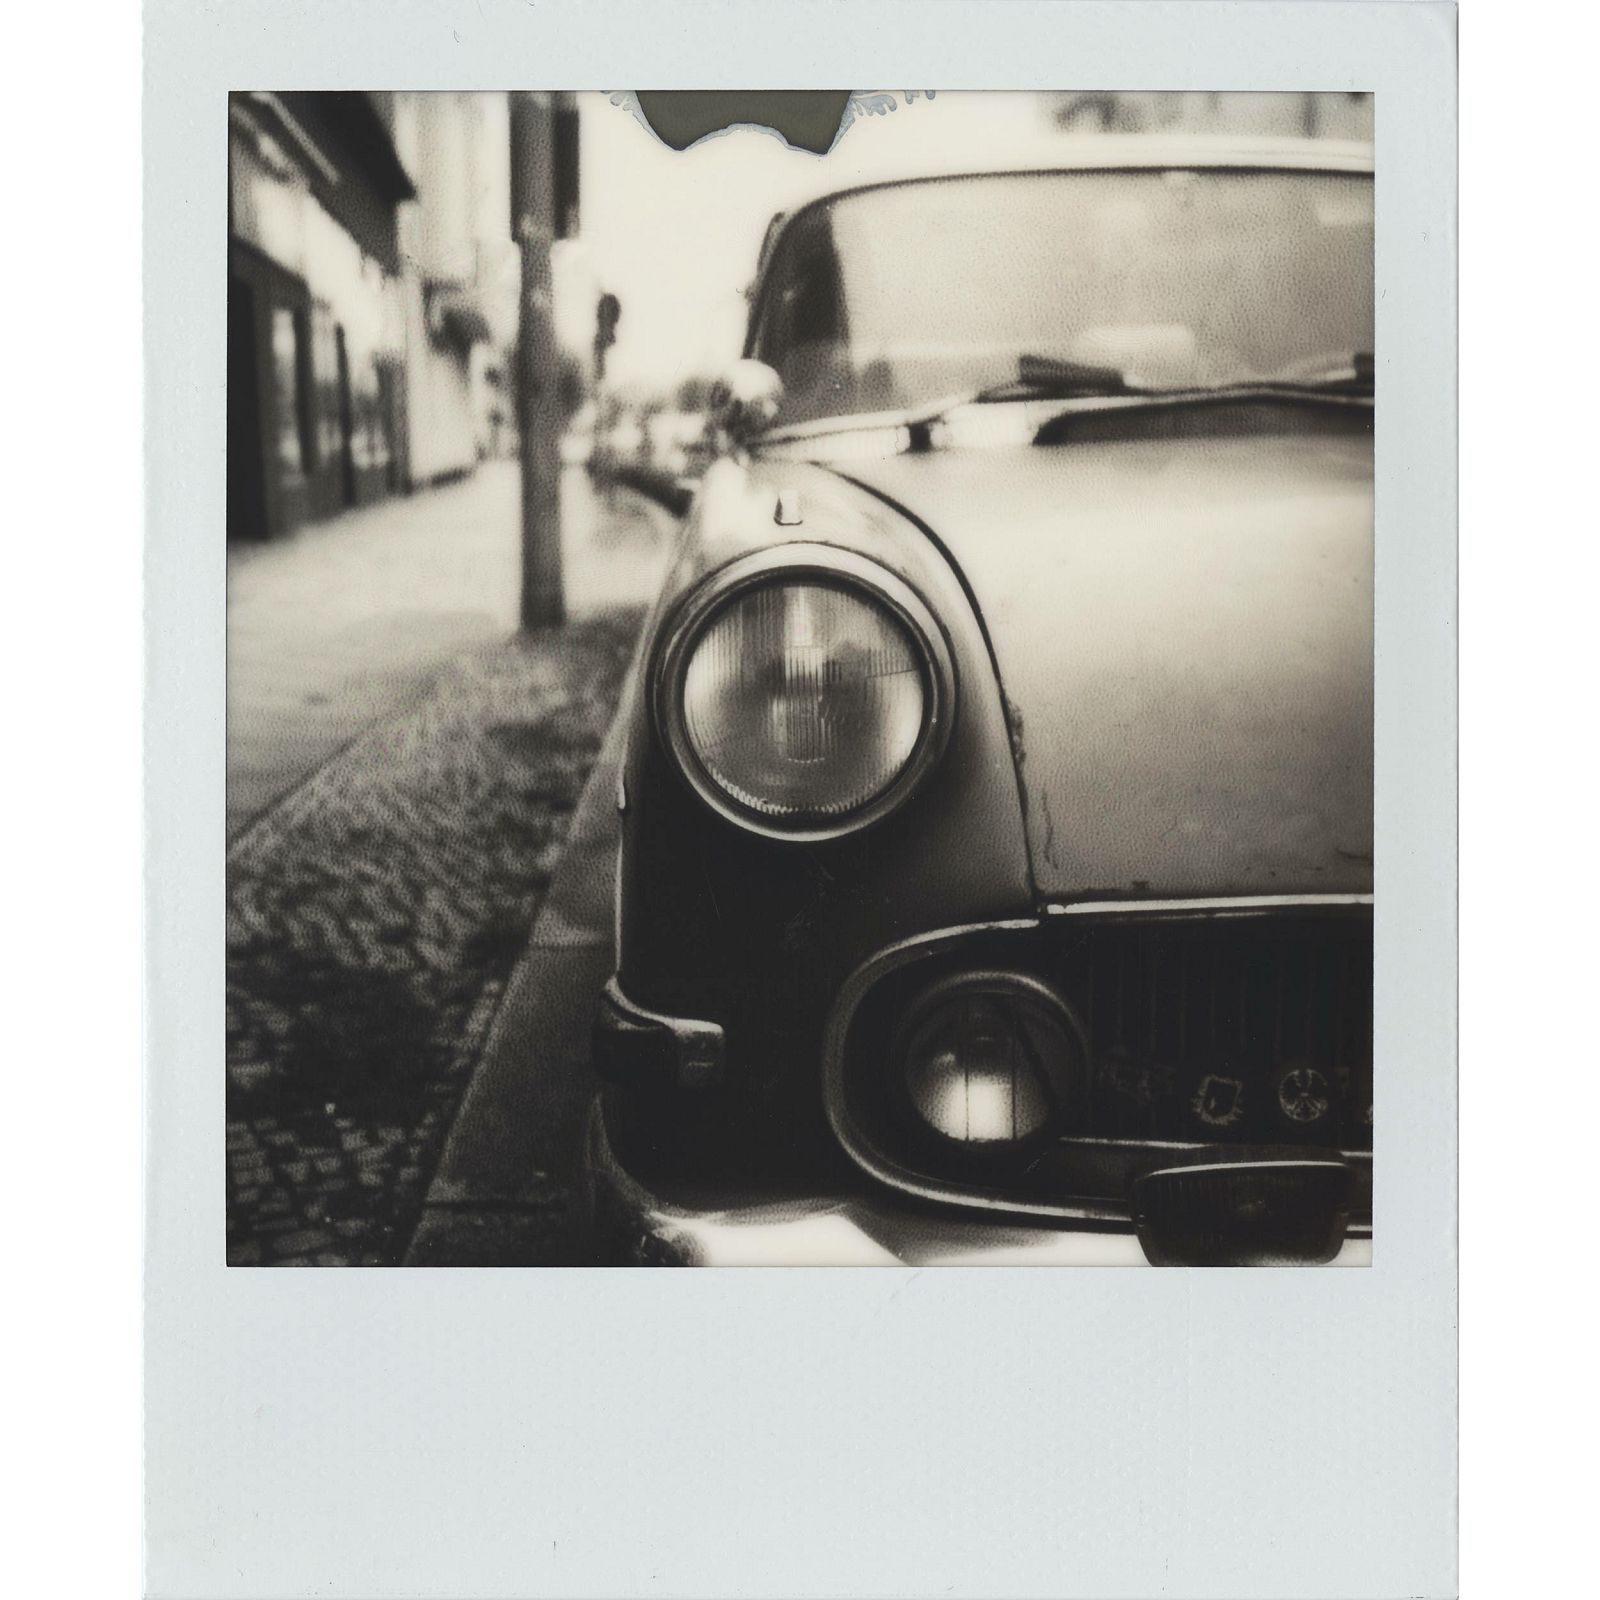 Impossible Black & White 2.0 Instant Film for Polaroid 600 Cameras (White Frame, 8 Exposures) 600 B/W Gen 2.0 (3834)